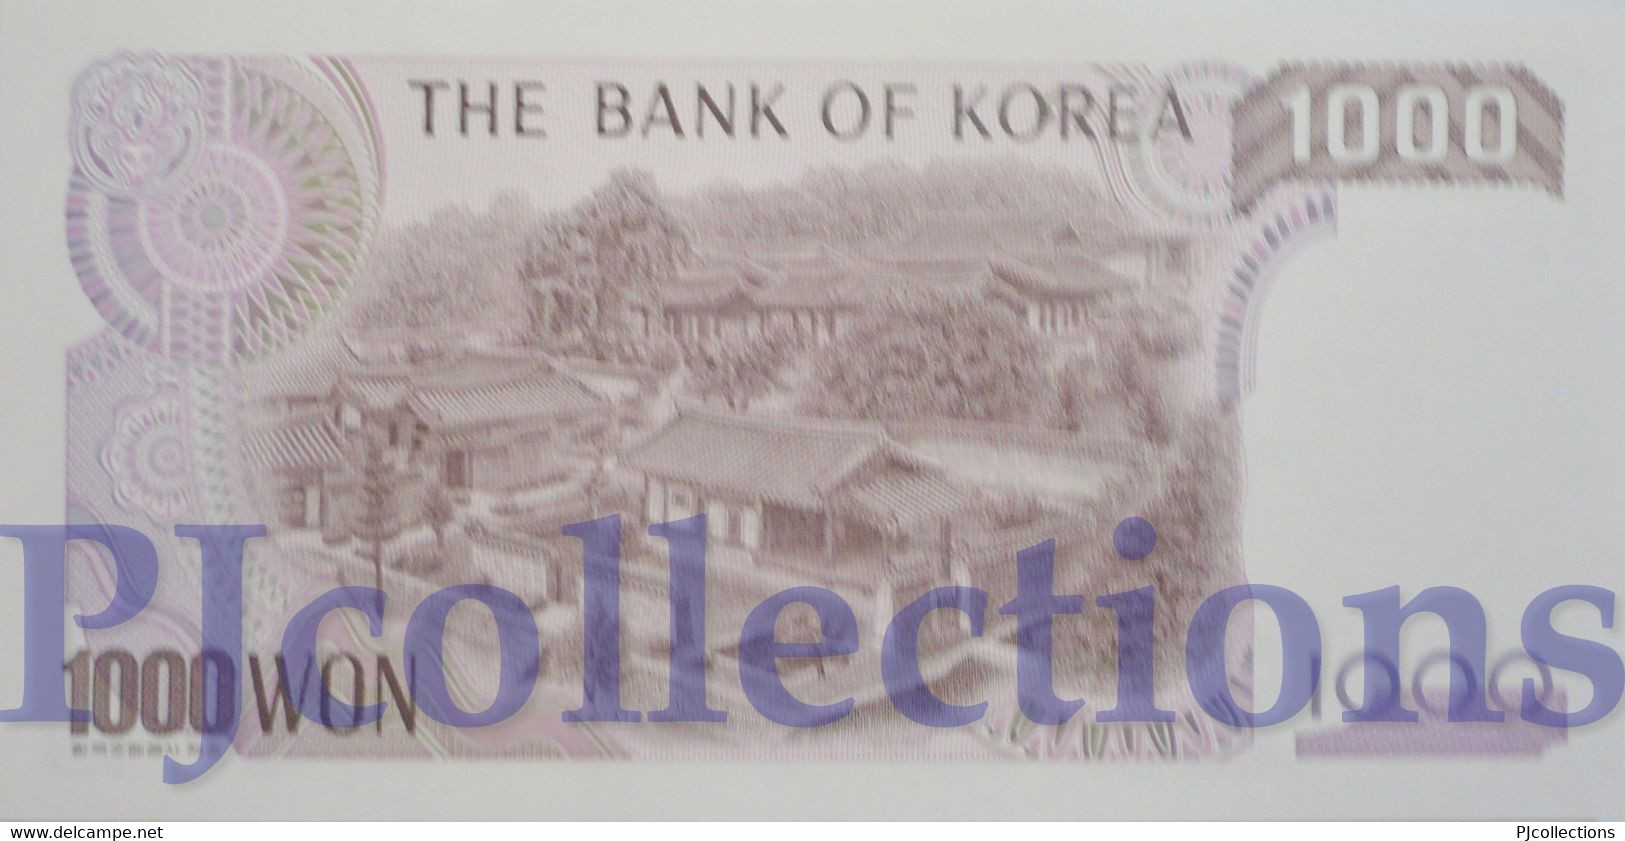 SOUTH KOREA 1000 WON 1983 PICK 47 UNC - Korea (Süd-)